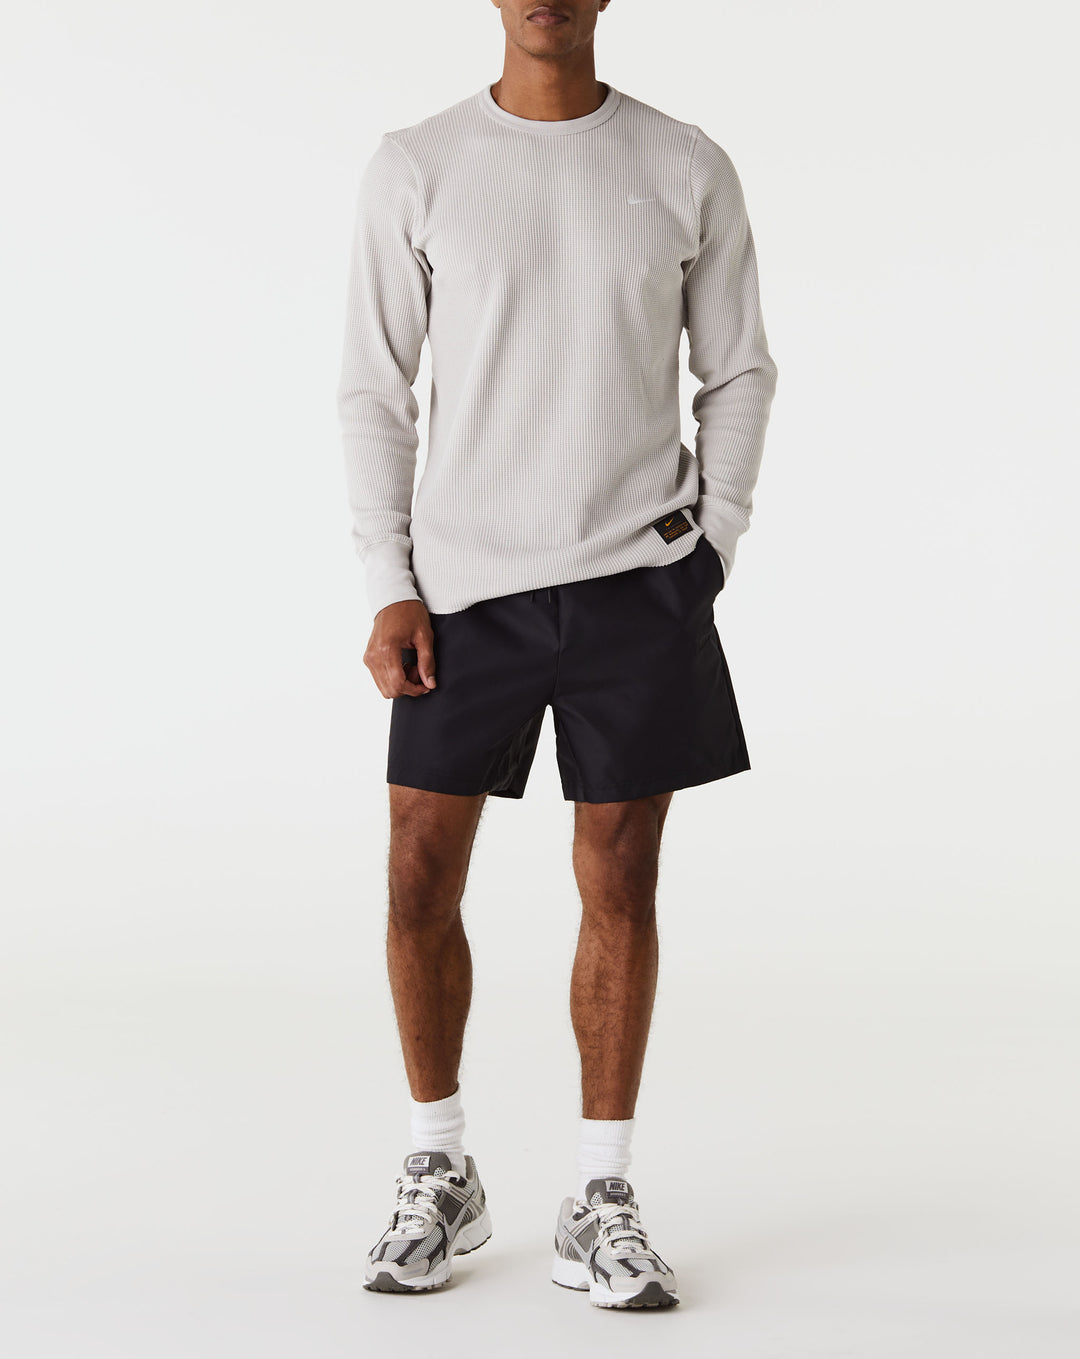 Nike Tech Essentials Utility Shorts  - XHIBITION